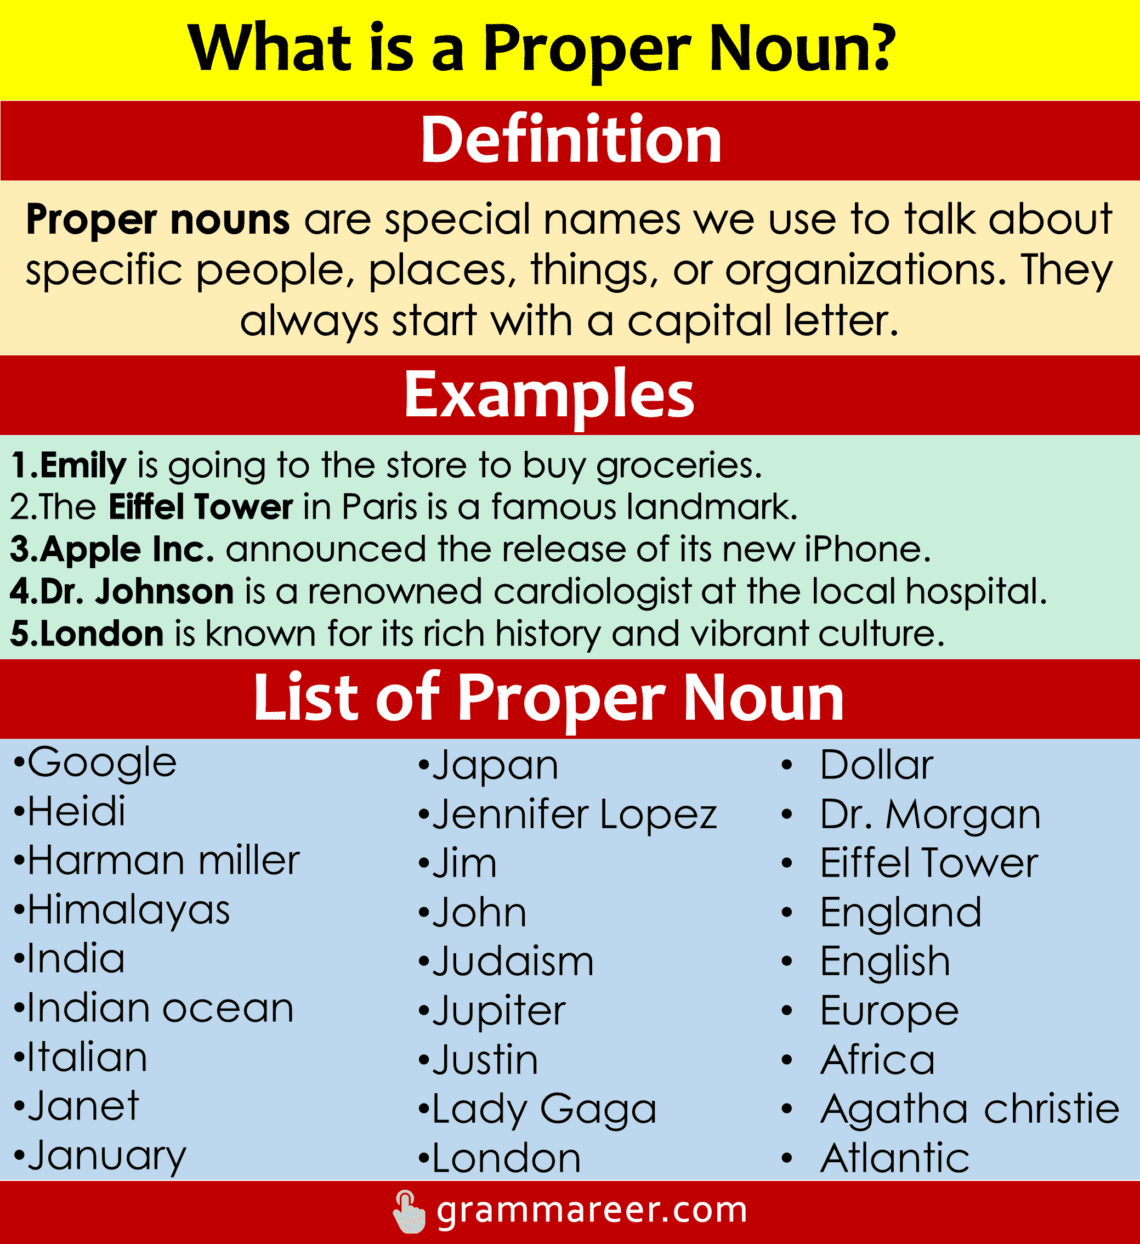 proper-noun-definition-and-examples-grammareer